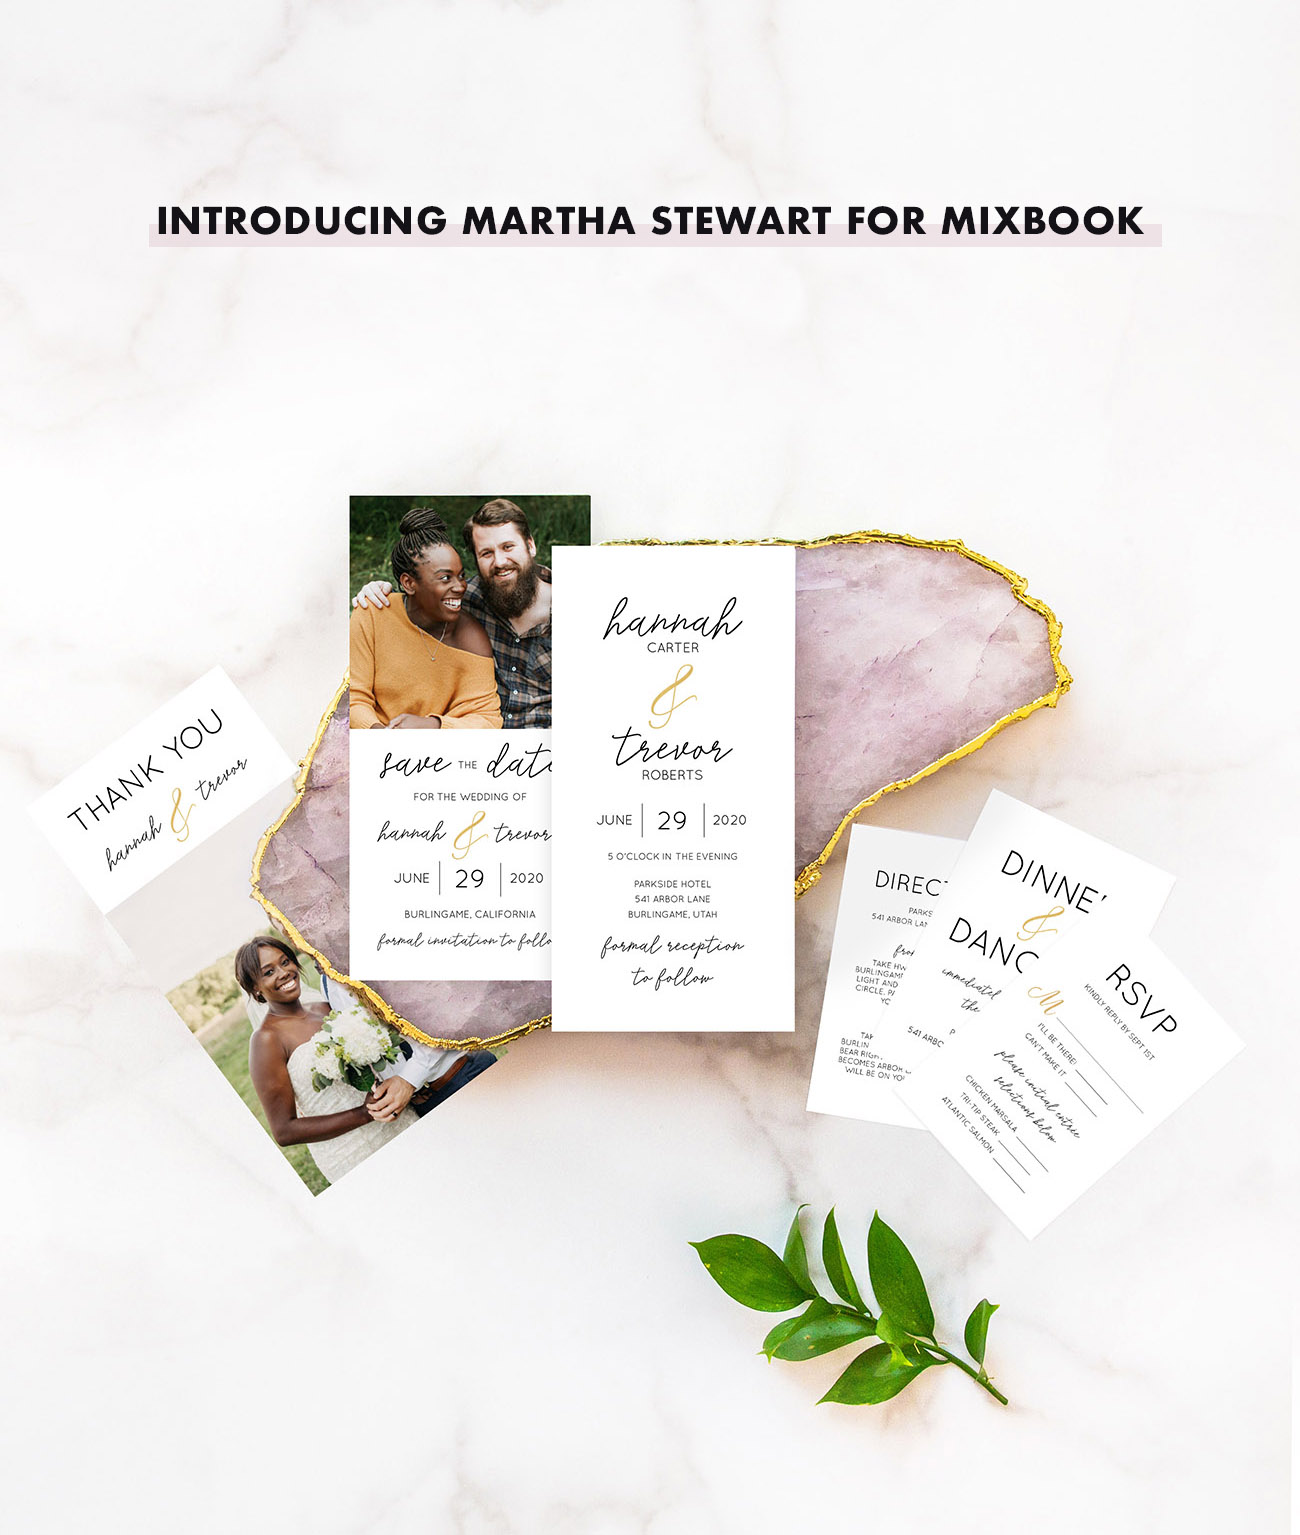 Martha Stewart for Mixbook